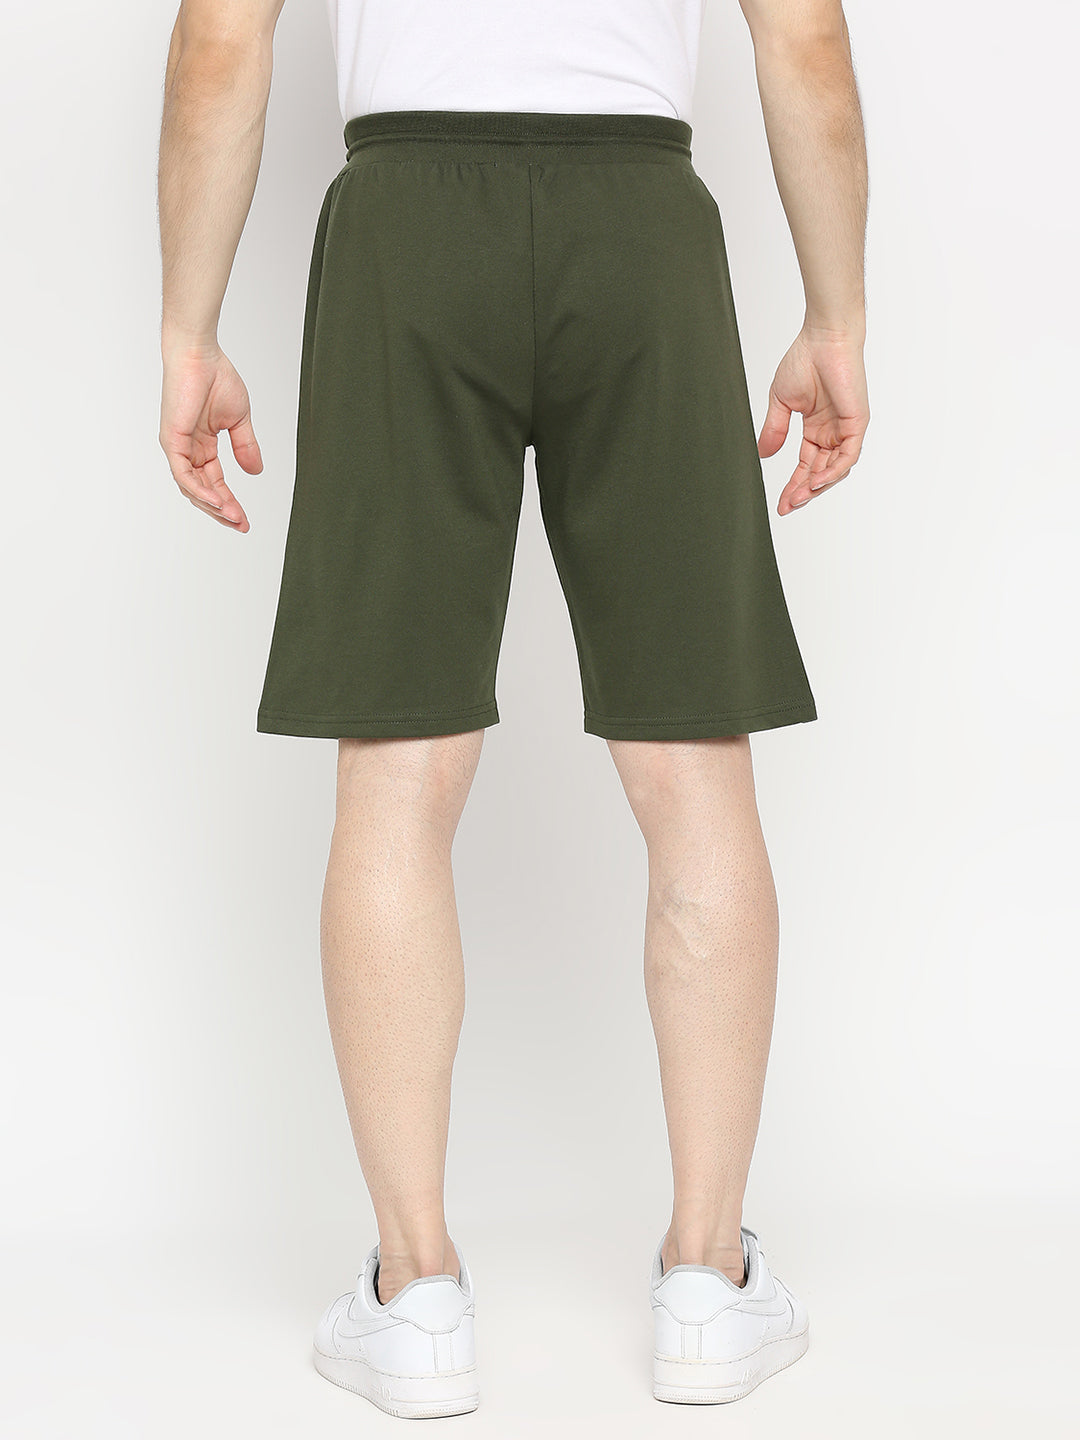 Men Olive Cotton Blend Shorts - Underjeans by Spykar